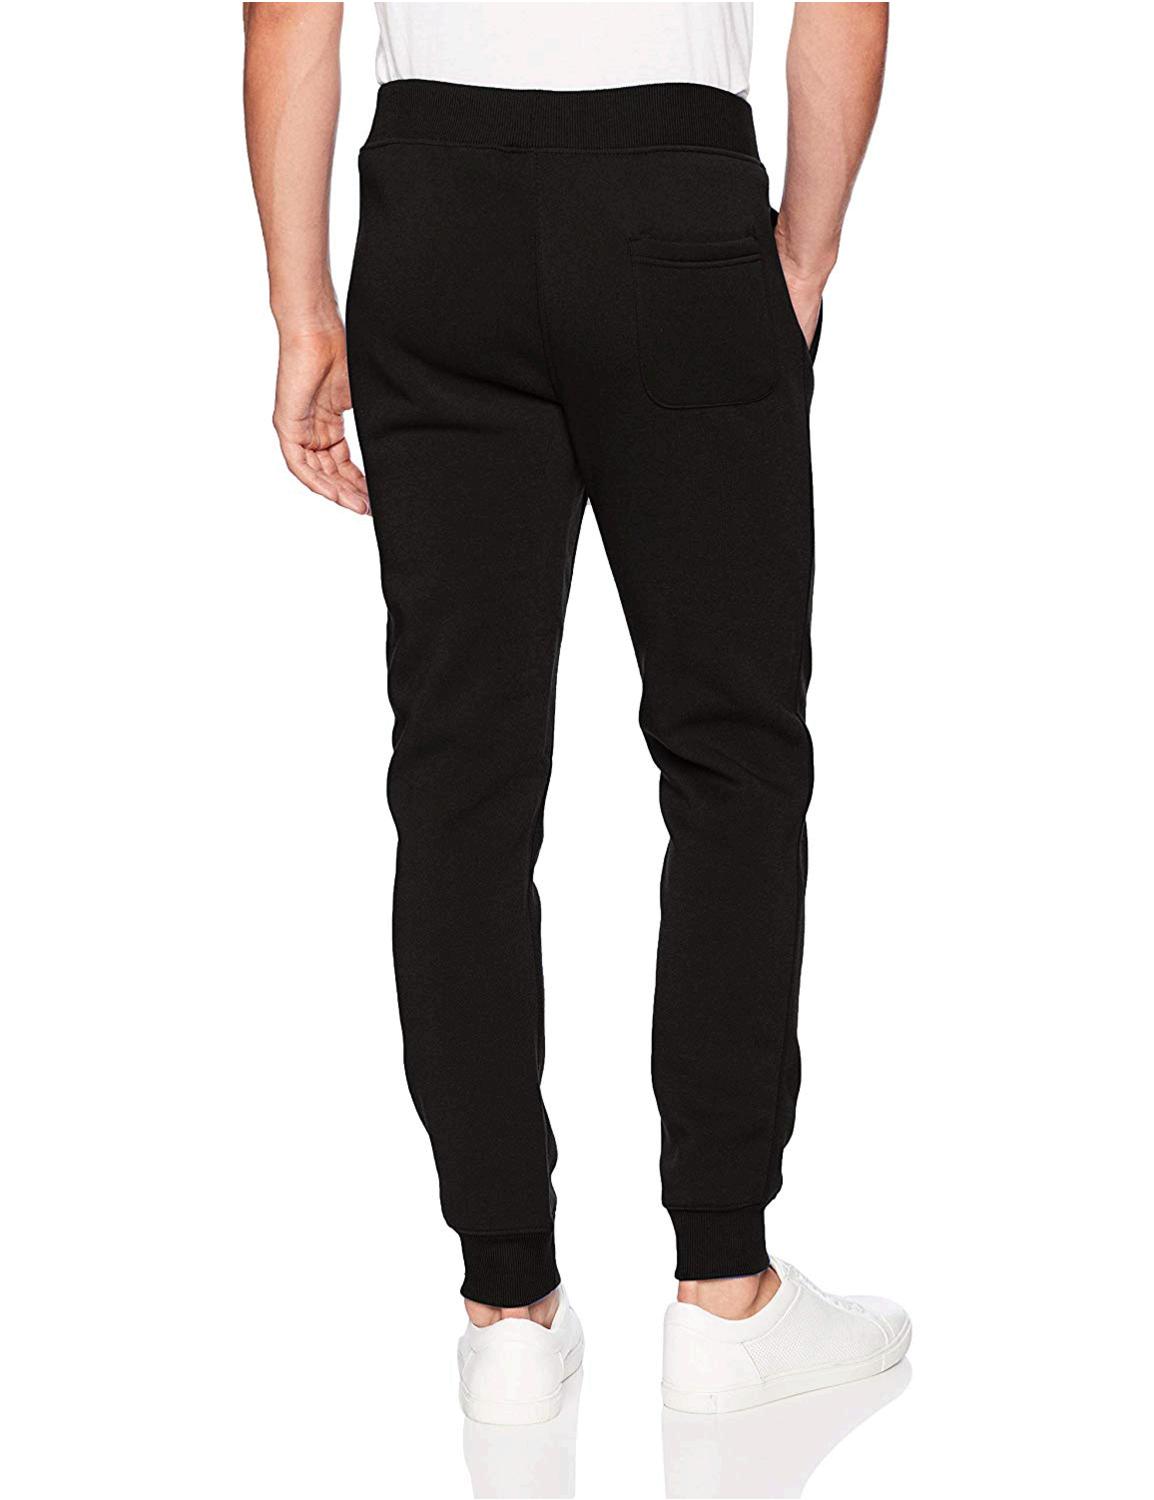 WT02 Men's Basic Jogger Fleece Pants, Black, X-Large, Black, Size X ...